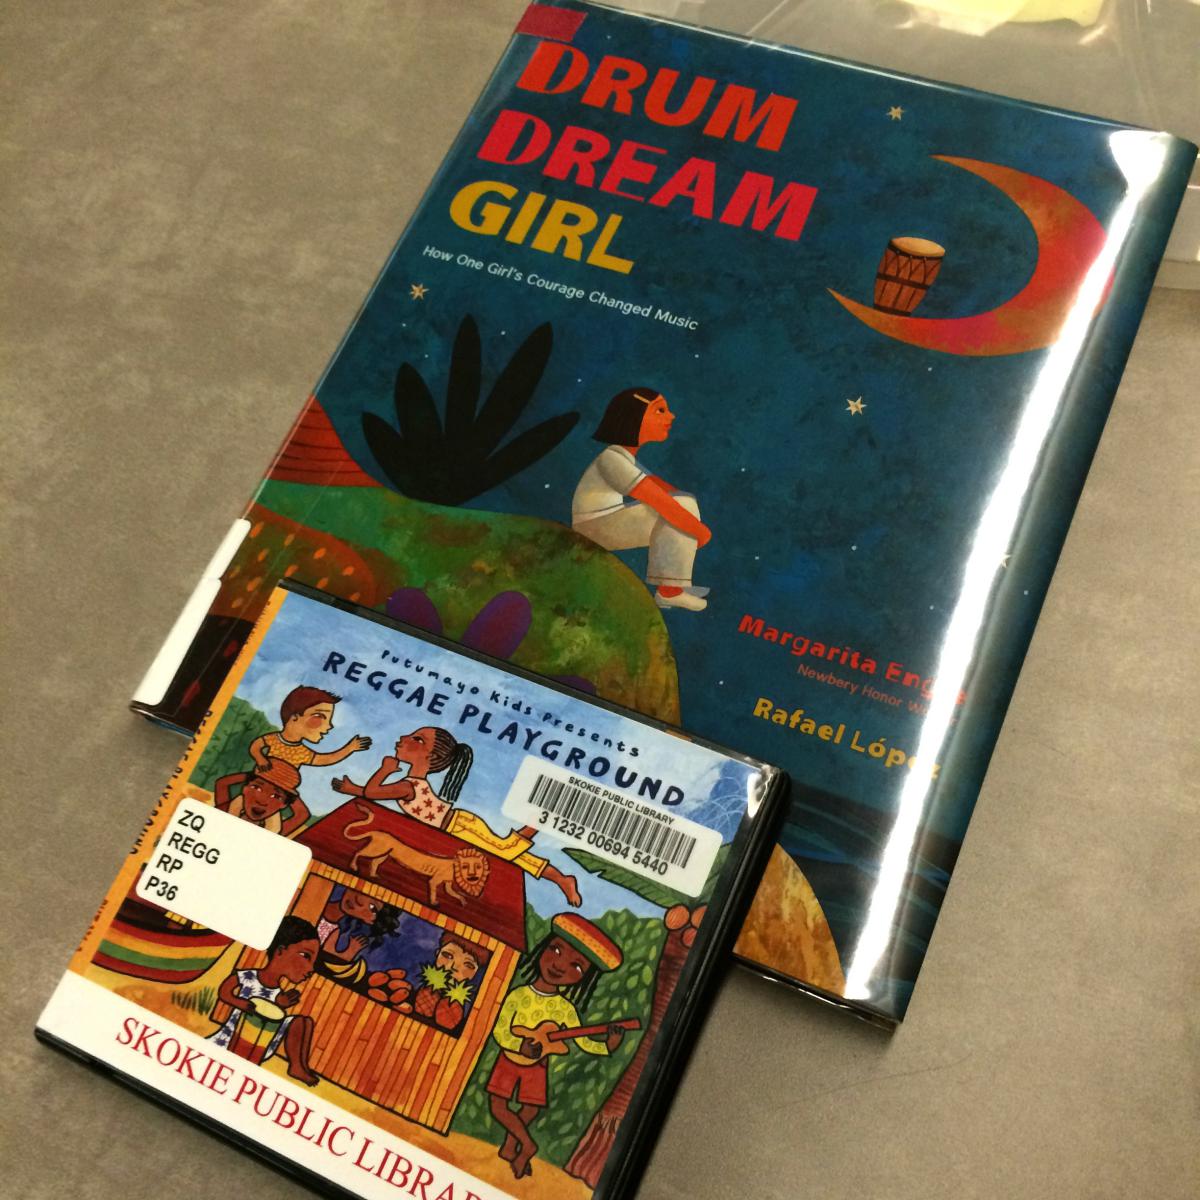 "Drum Dream Girl" children's book